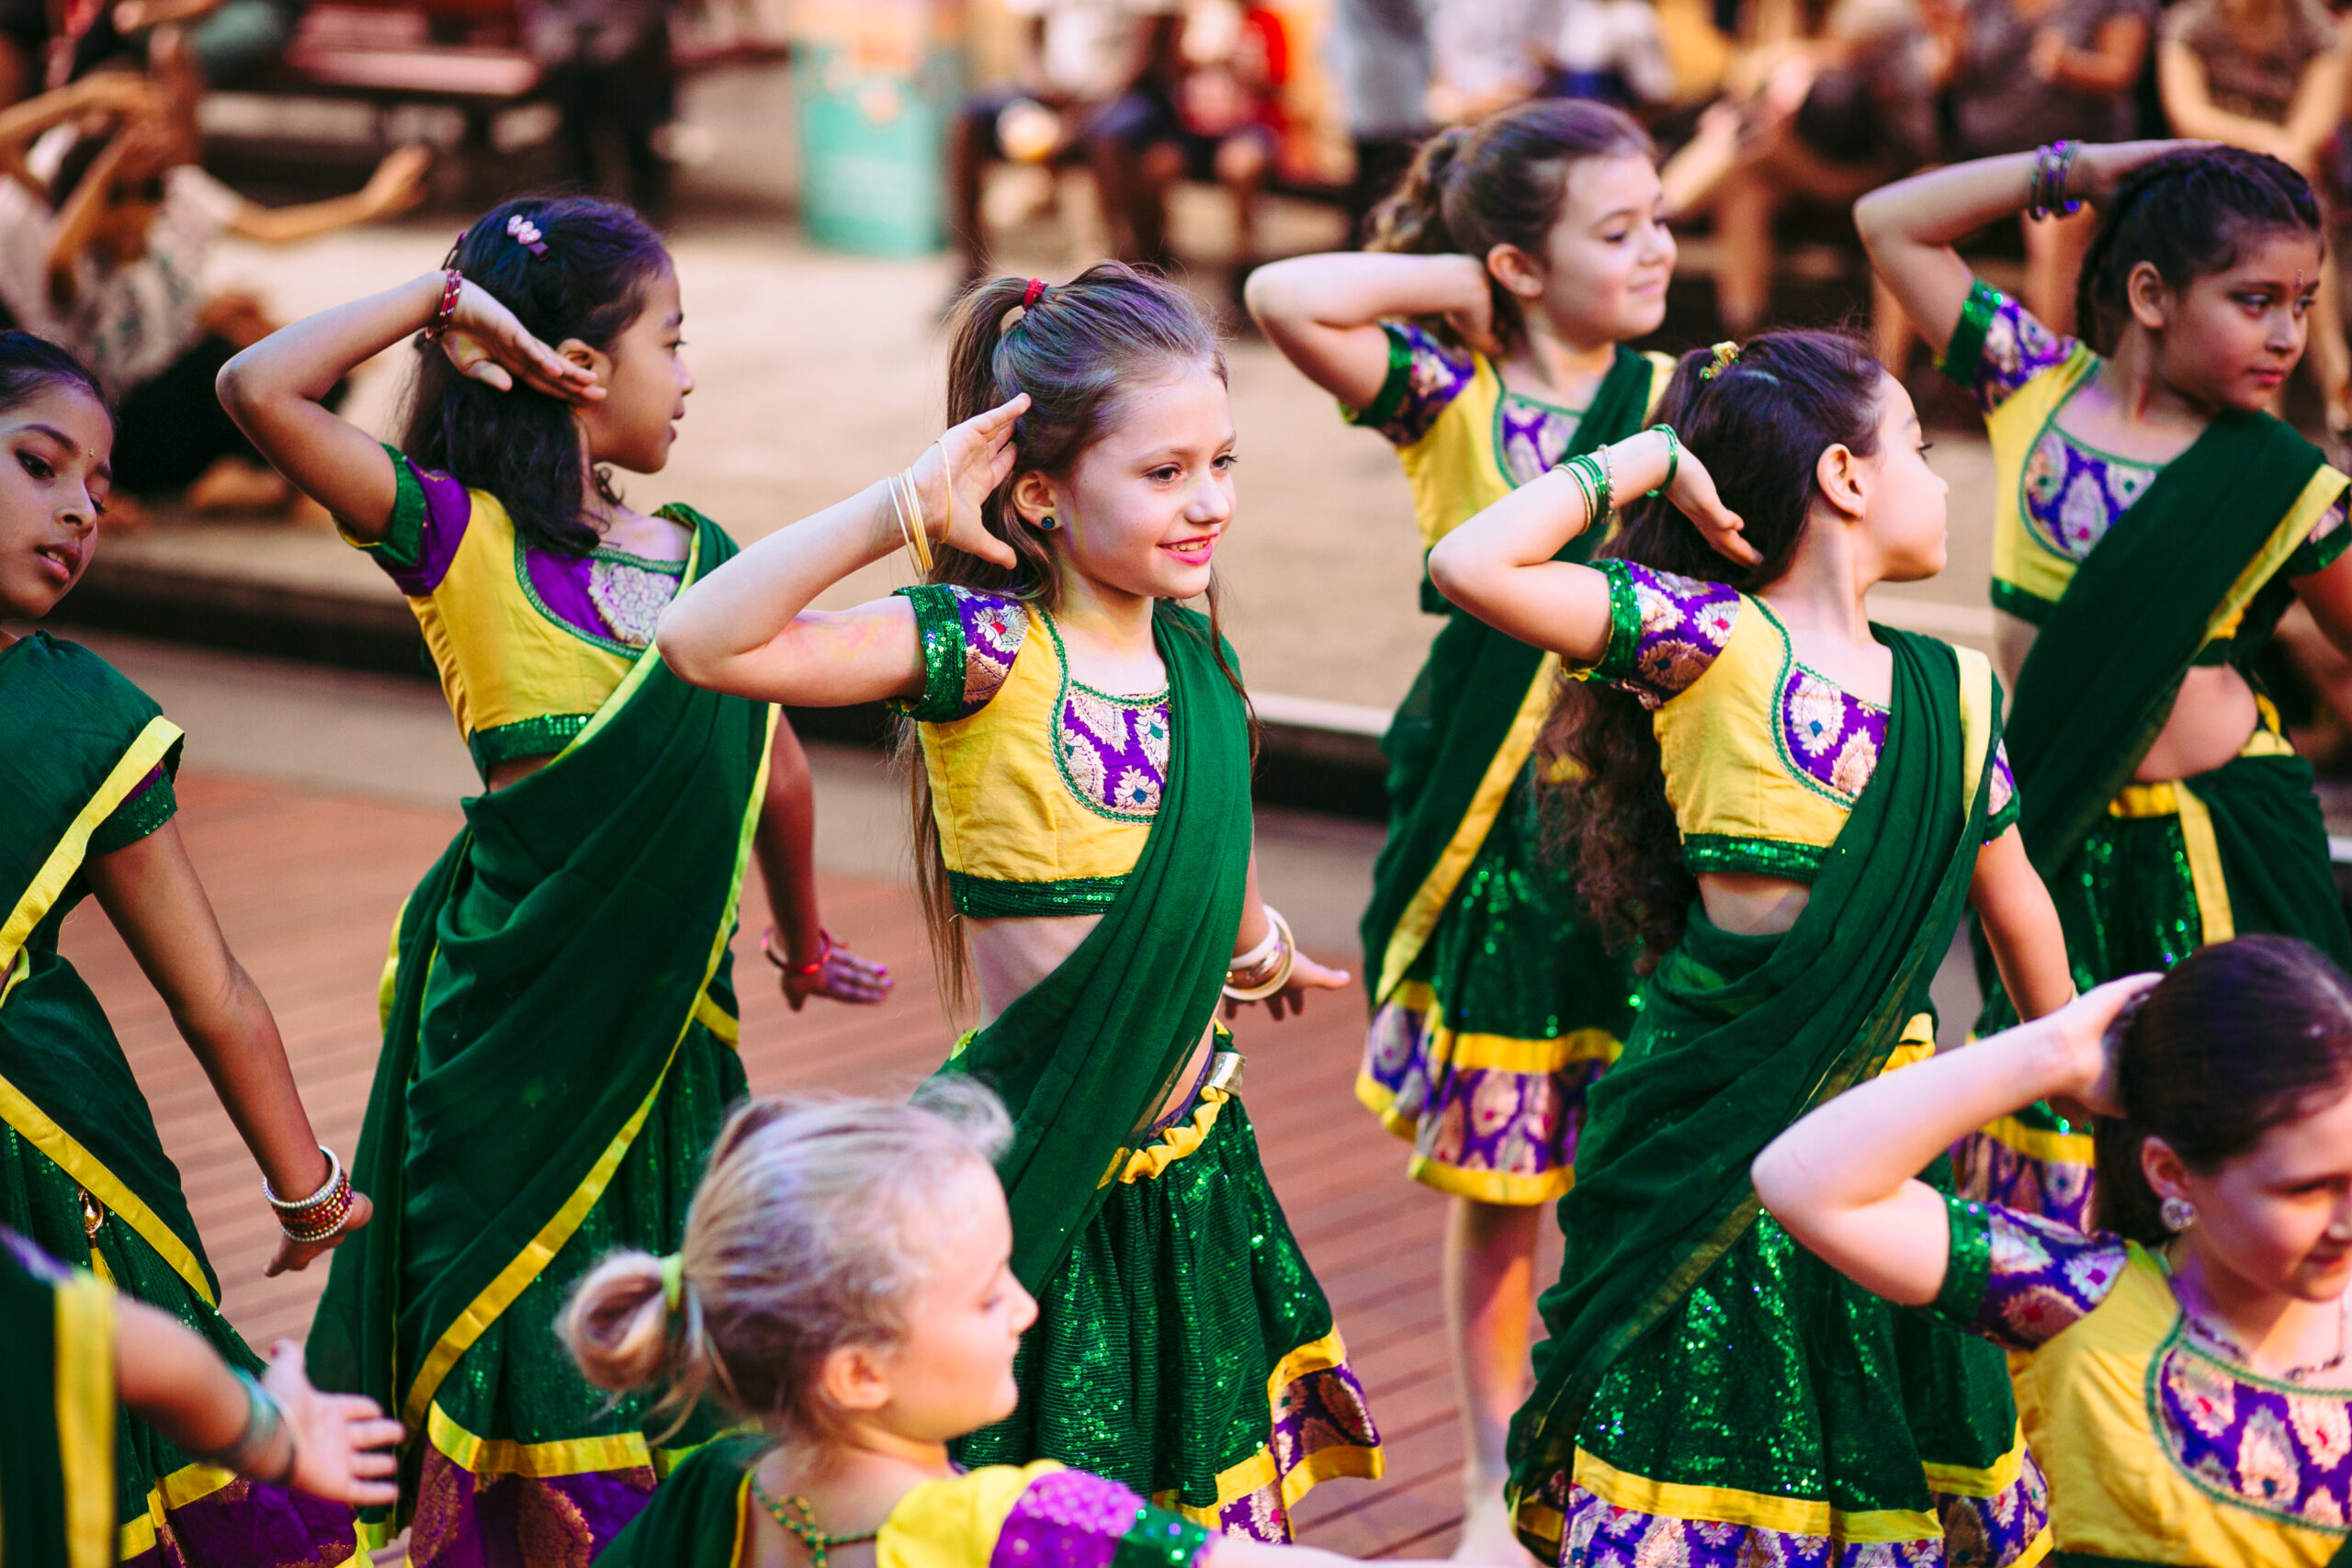 Mini Masalas - Group of children dancers wearing green saris and performing